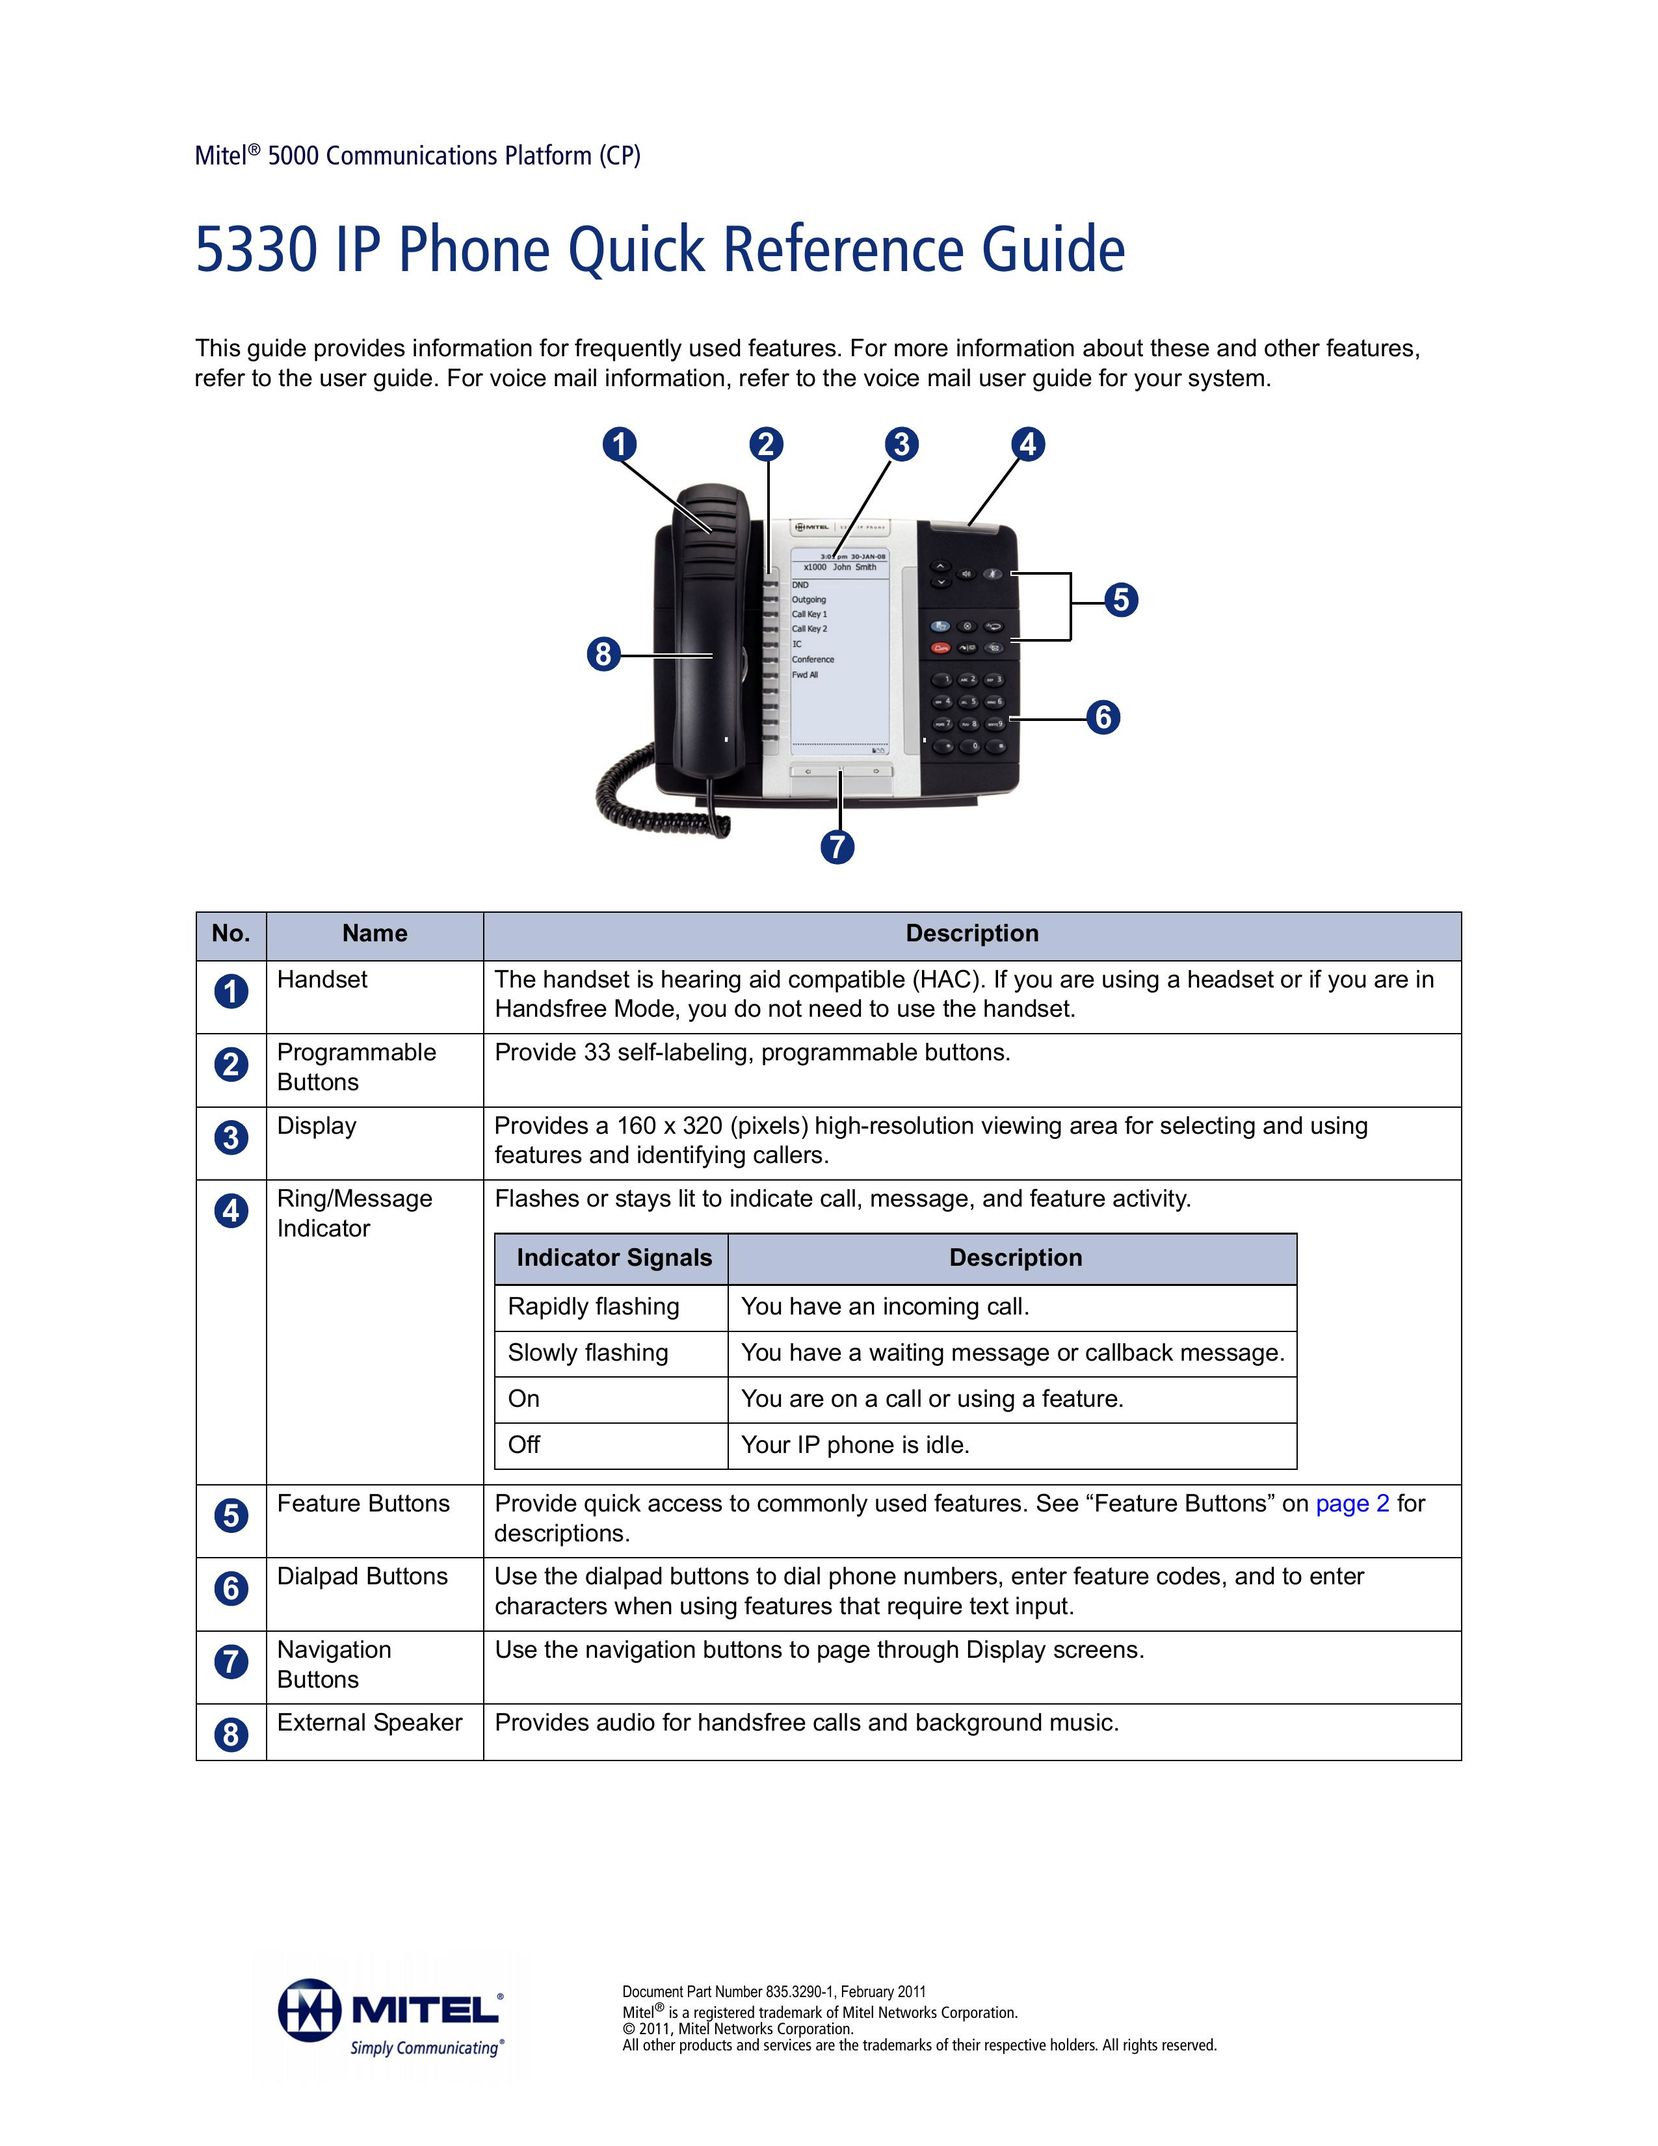 Mitel 5330 IP IP Phone User Manual